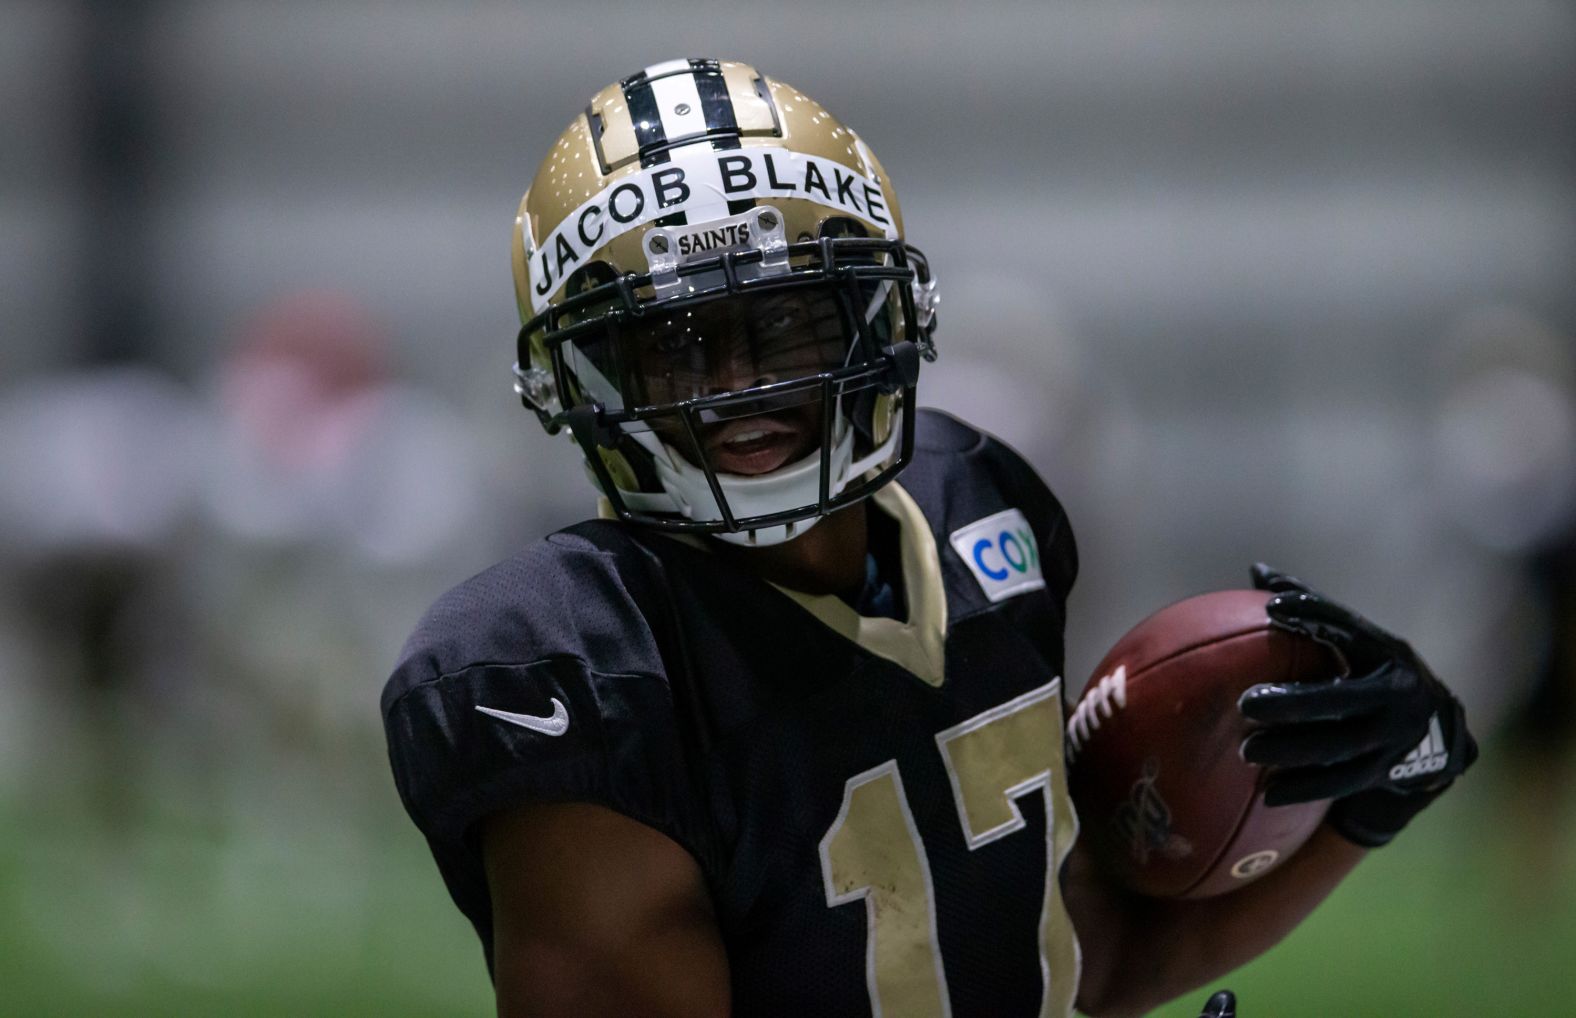 New Orleans Saints wide receiver Emmanuel Sanders wears Jacob Blake's name on his helmet during a practice on August 27.